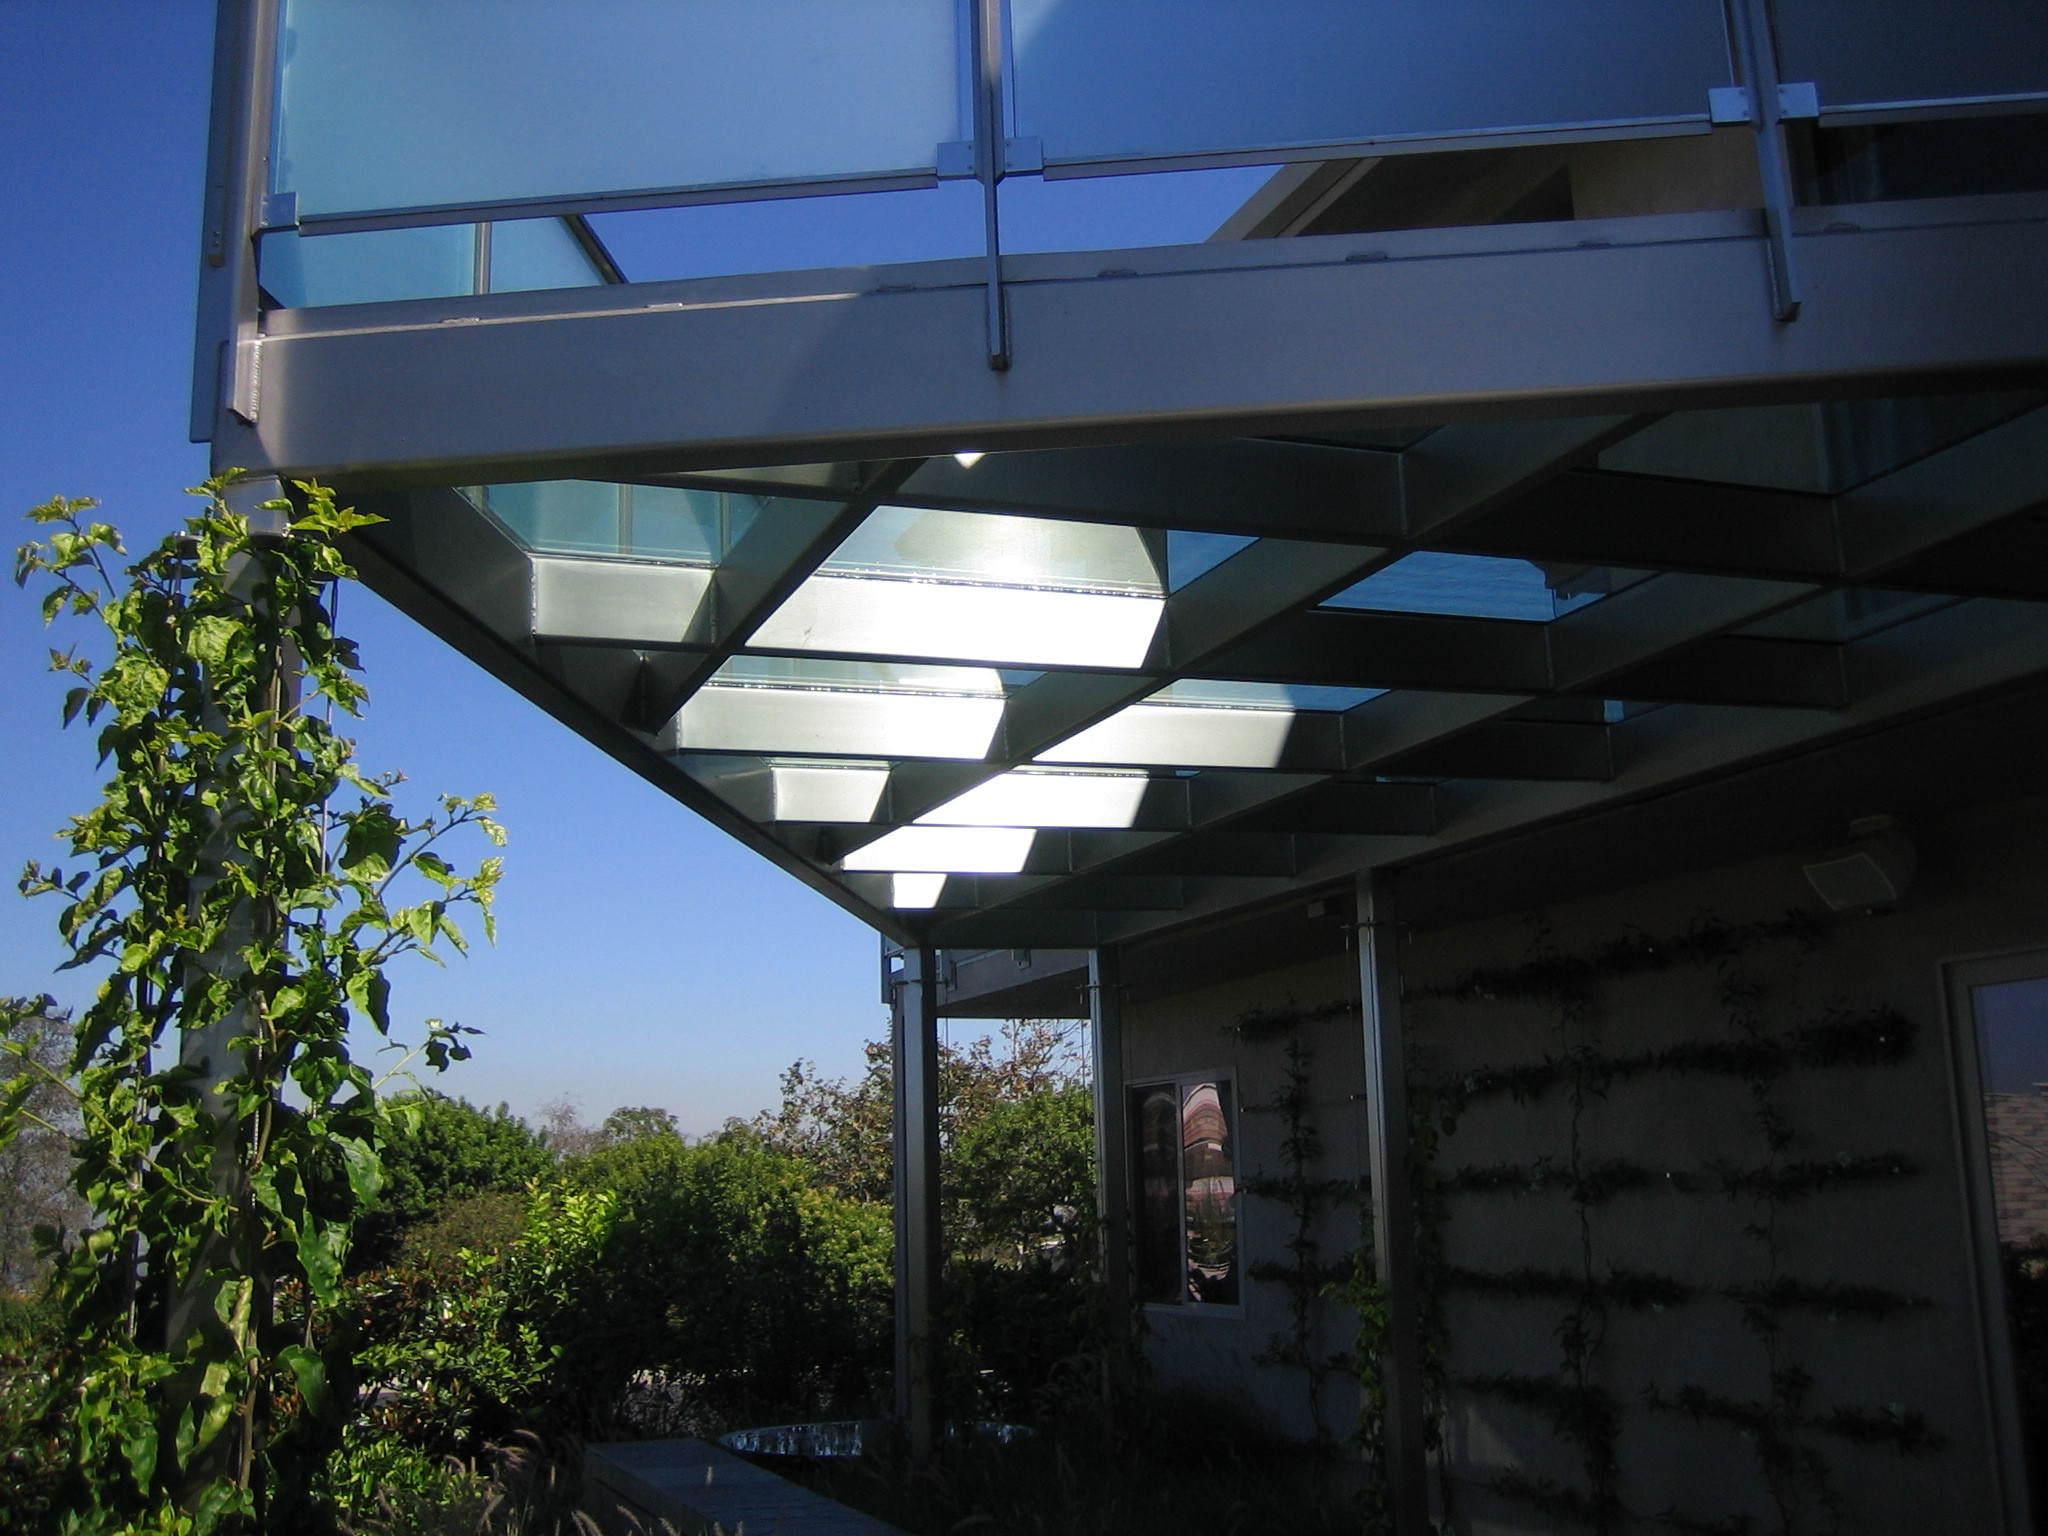 Glass and steel balcony